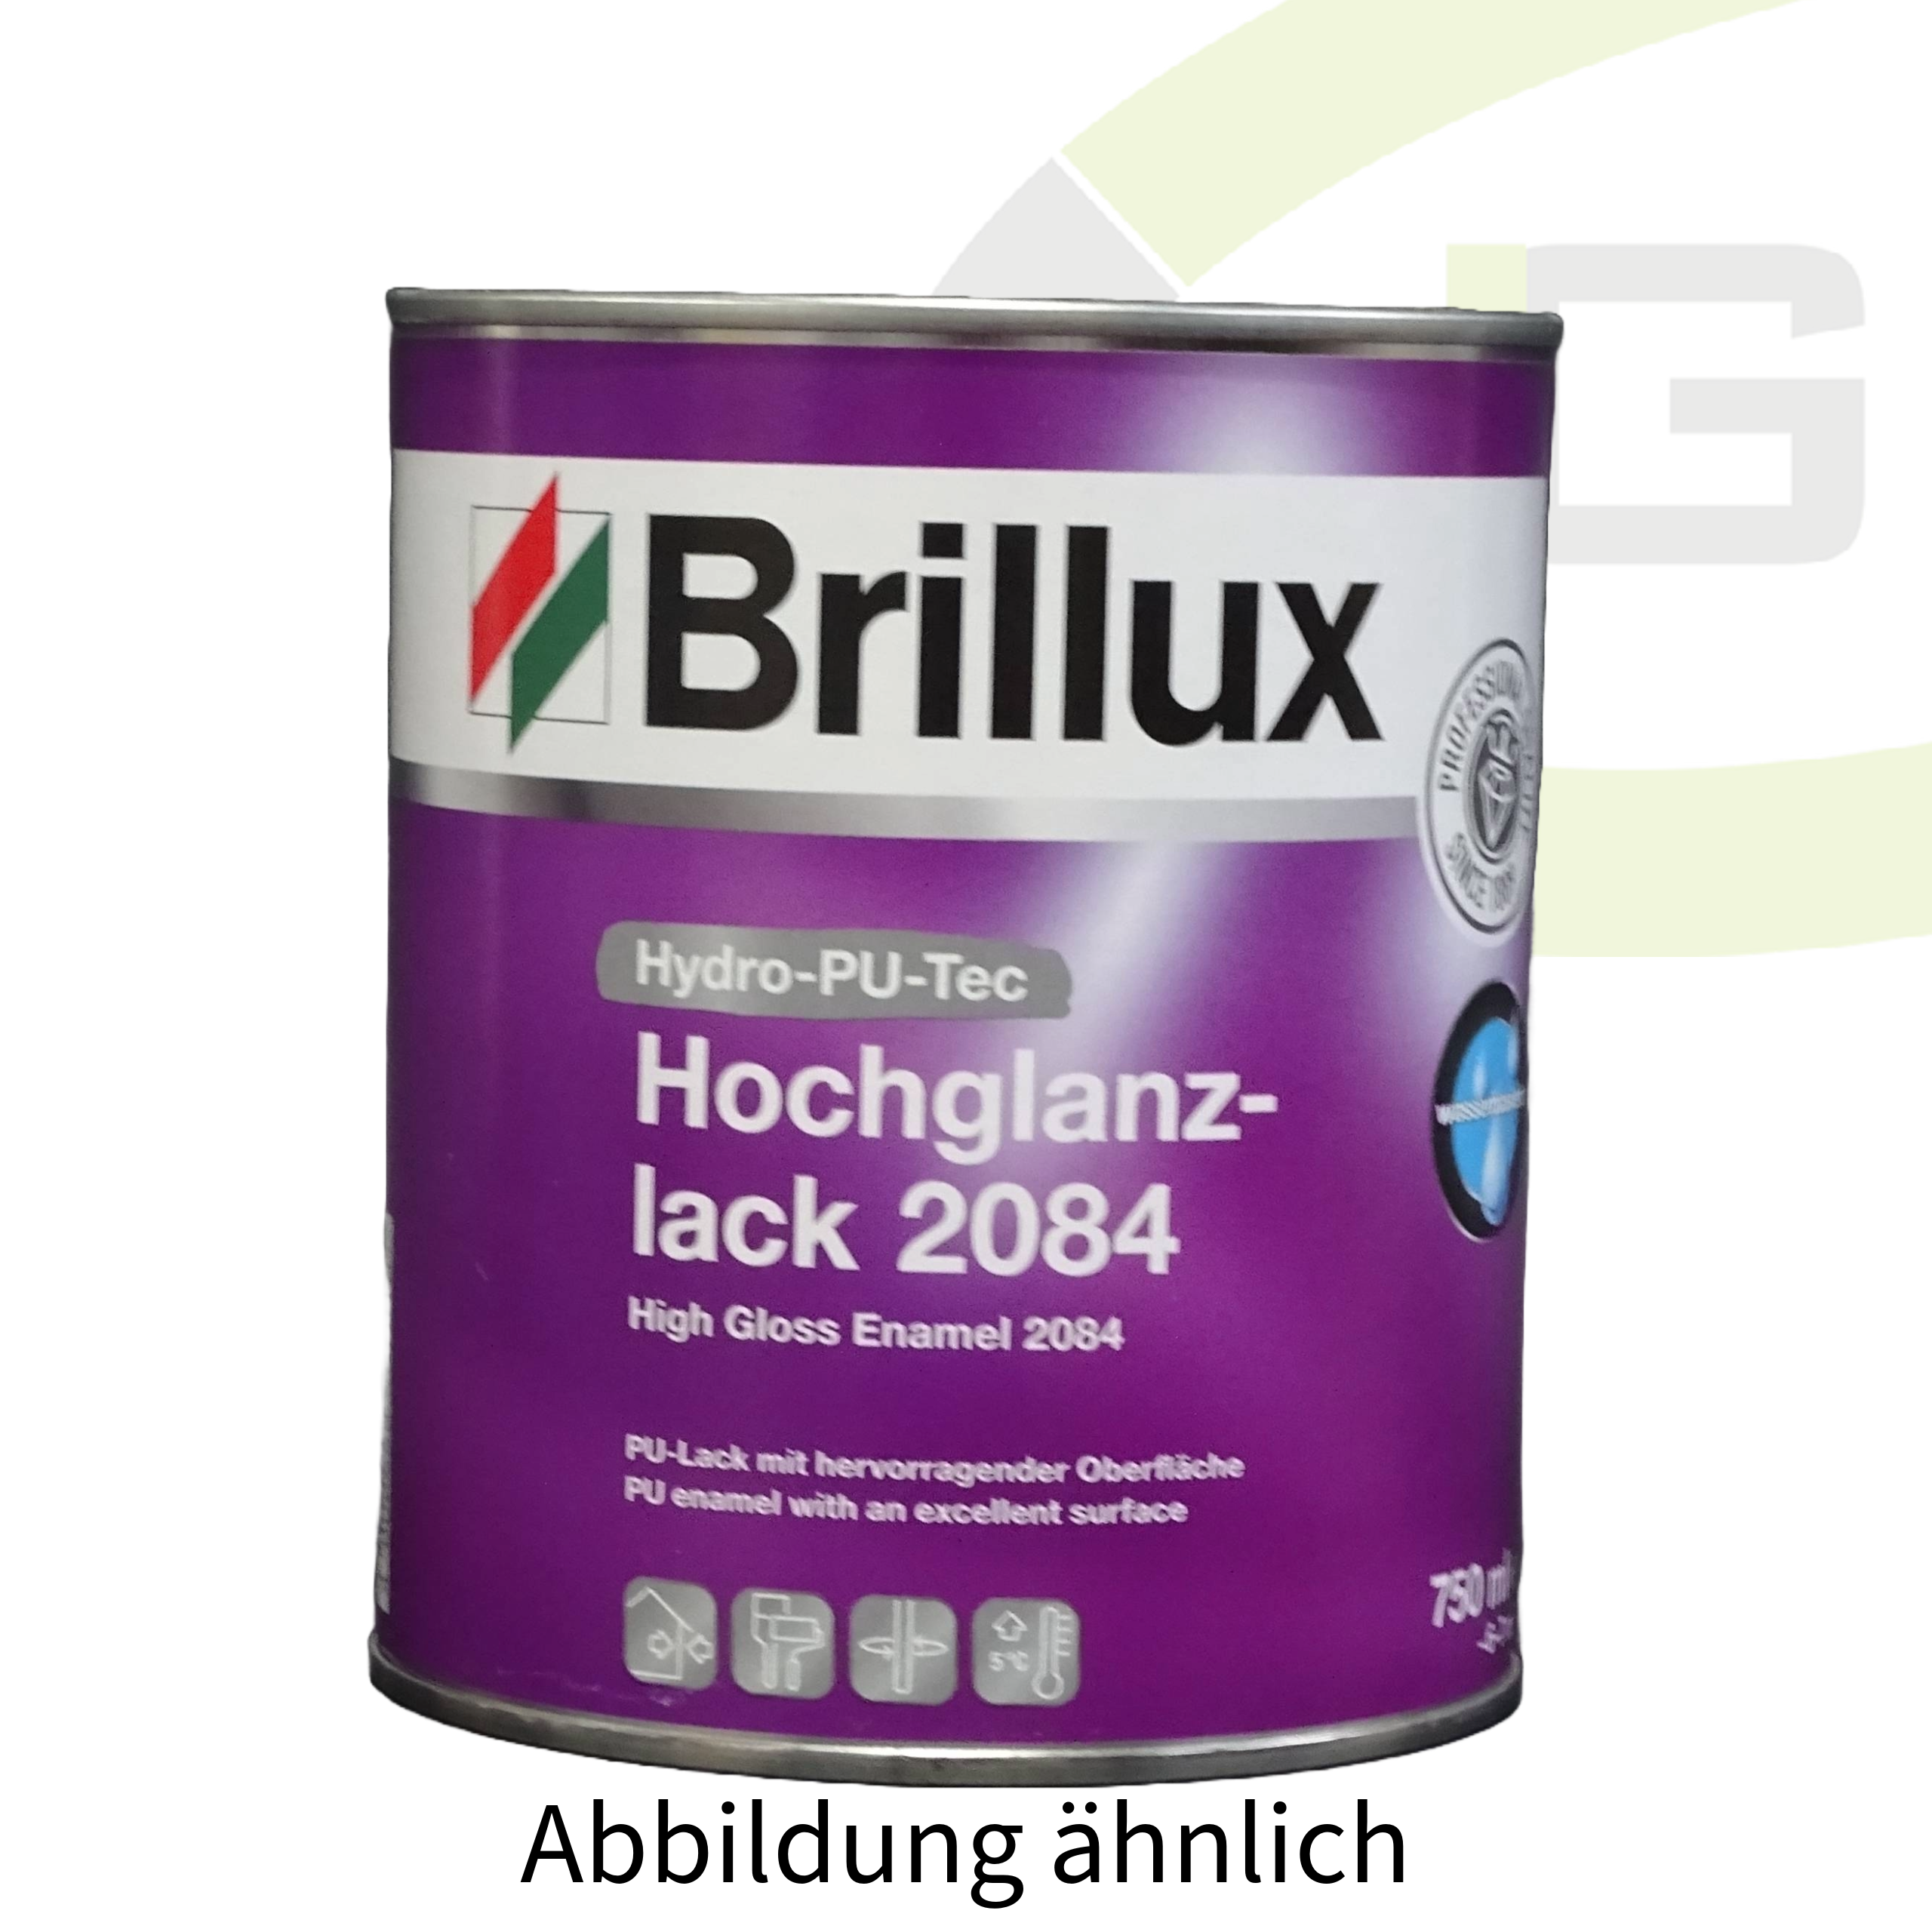 Brillux Hydro-PU-Tec Hochglanzlack 2084 weiß - 3.00 LTR / Wasserbasierter Endlack